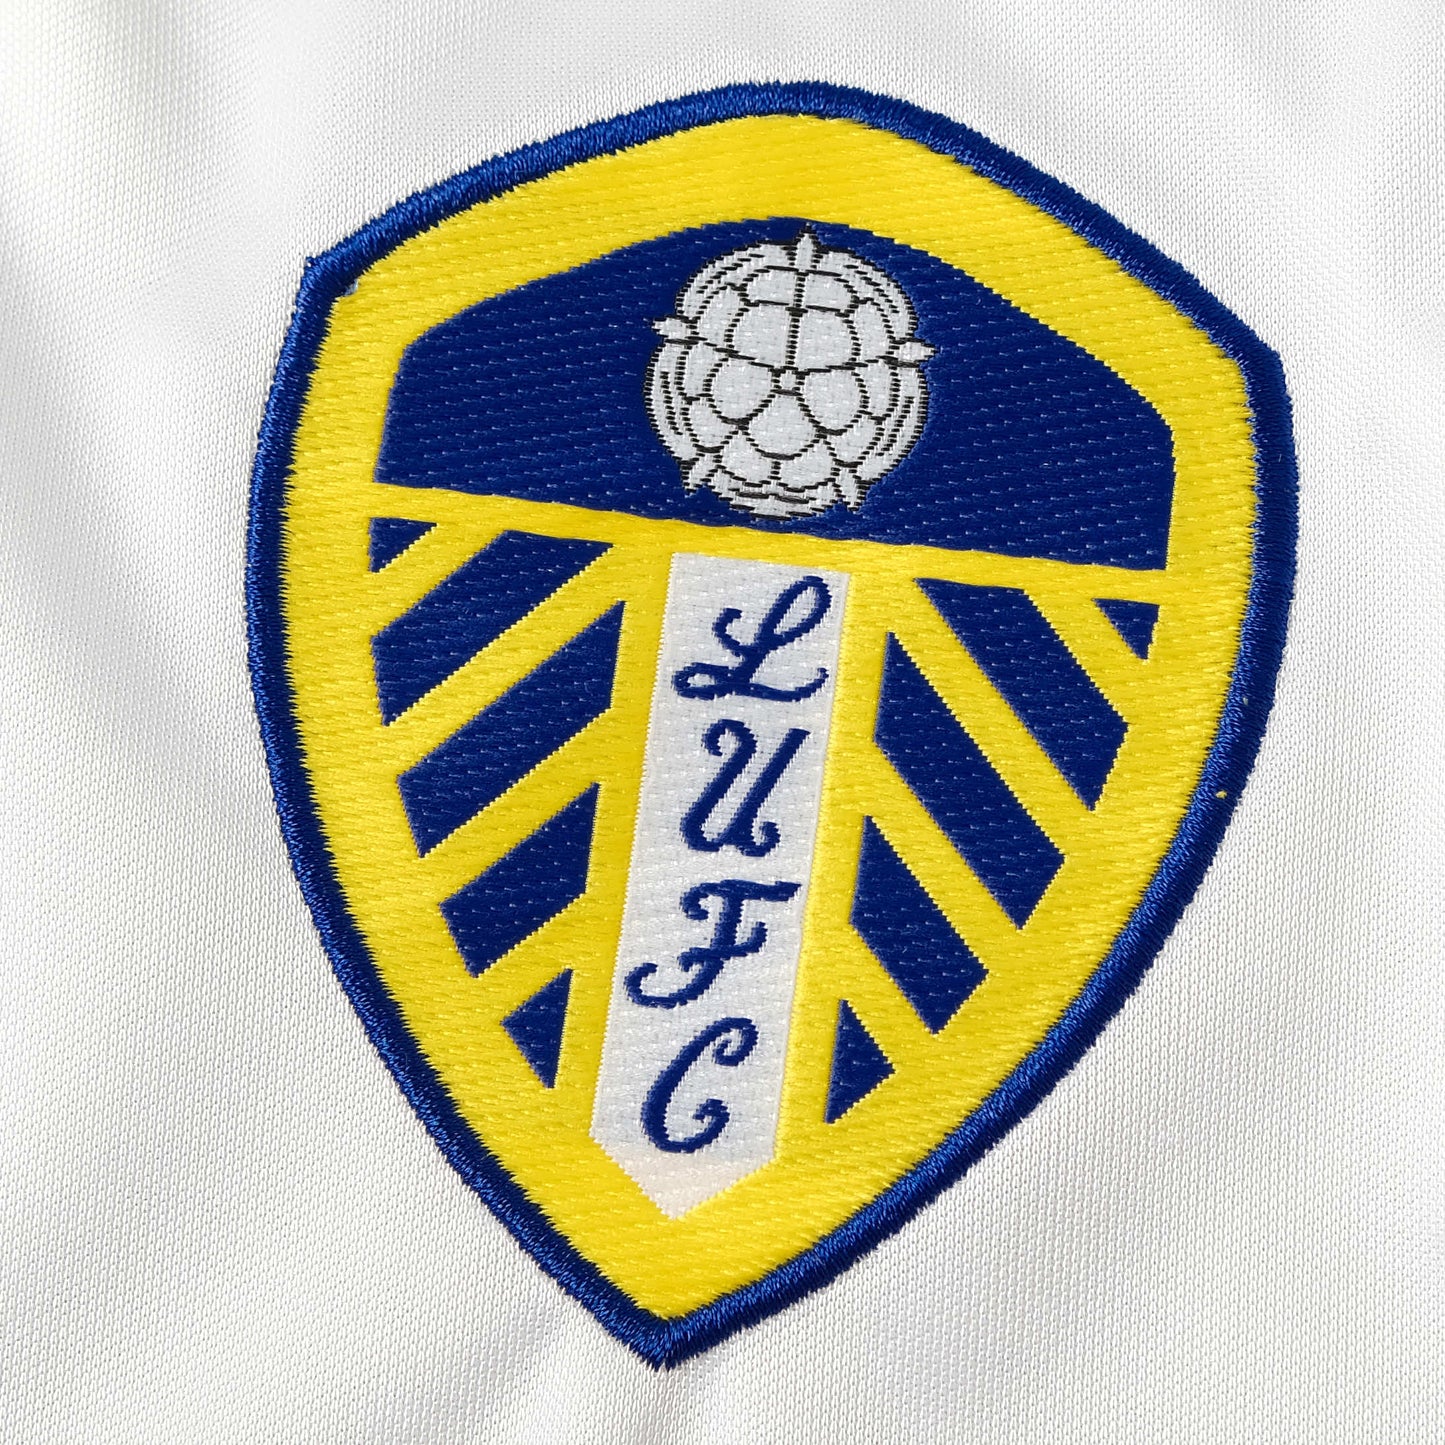 Leeds United 98-00 Home Shirt